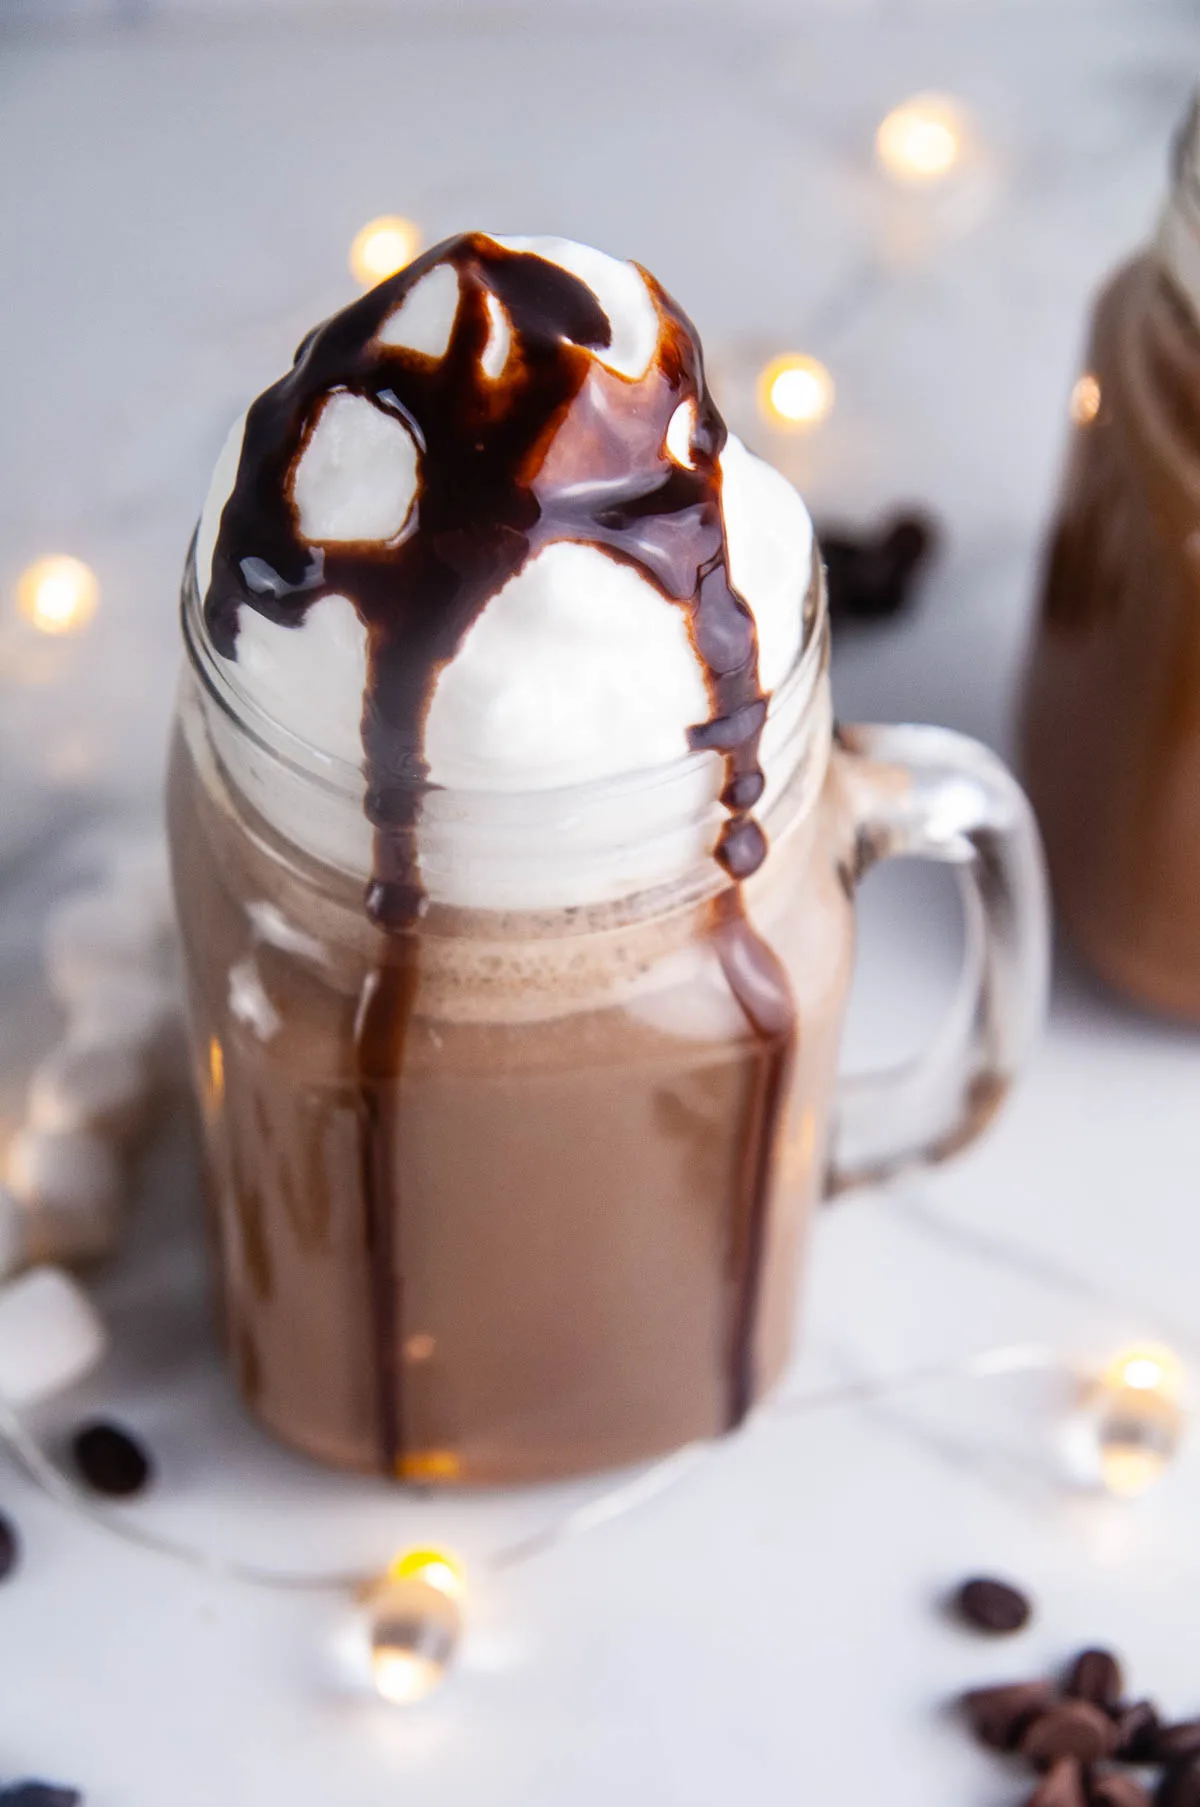 15 Best Hot Chocolate Makers 2023 - Top Hot Chocolate Machines